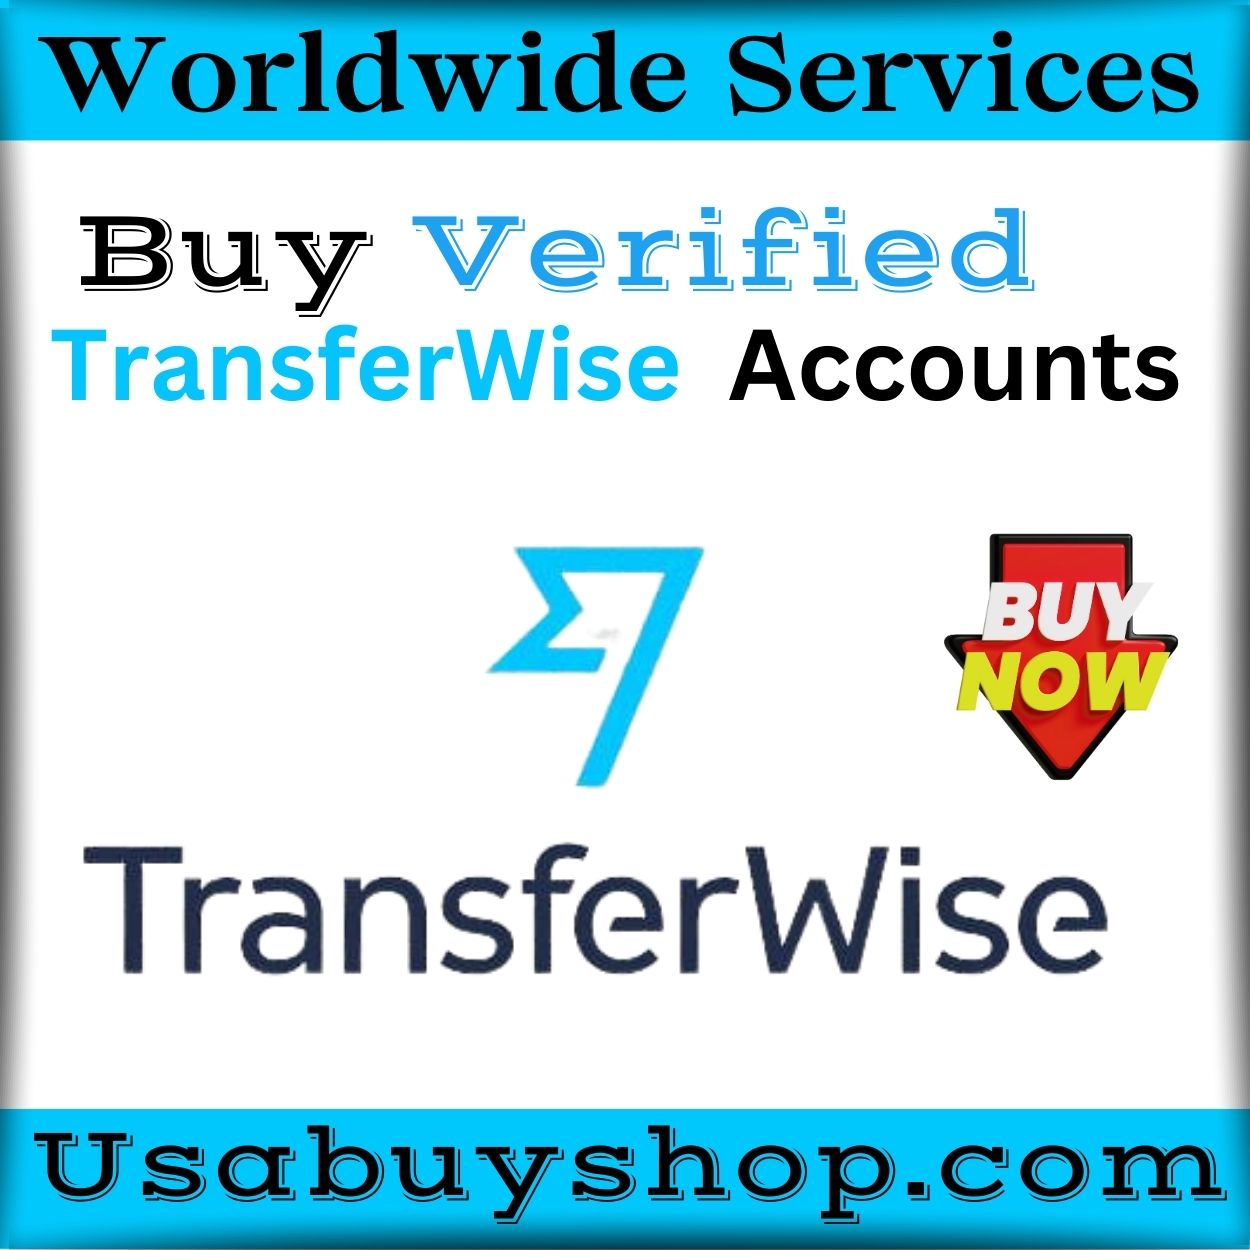 Buy Verified TransferWise Accounts - 100% Verified Account